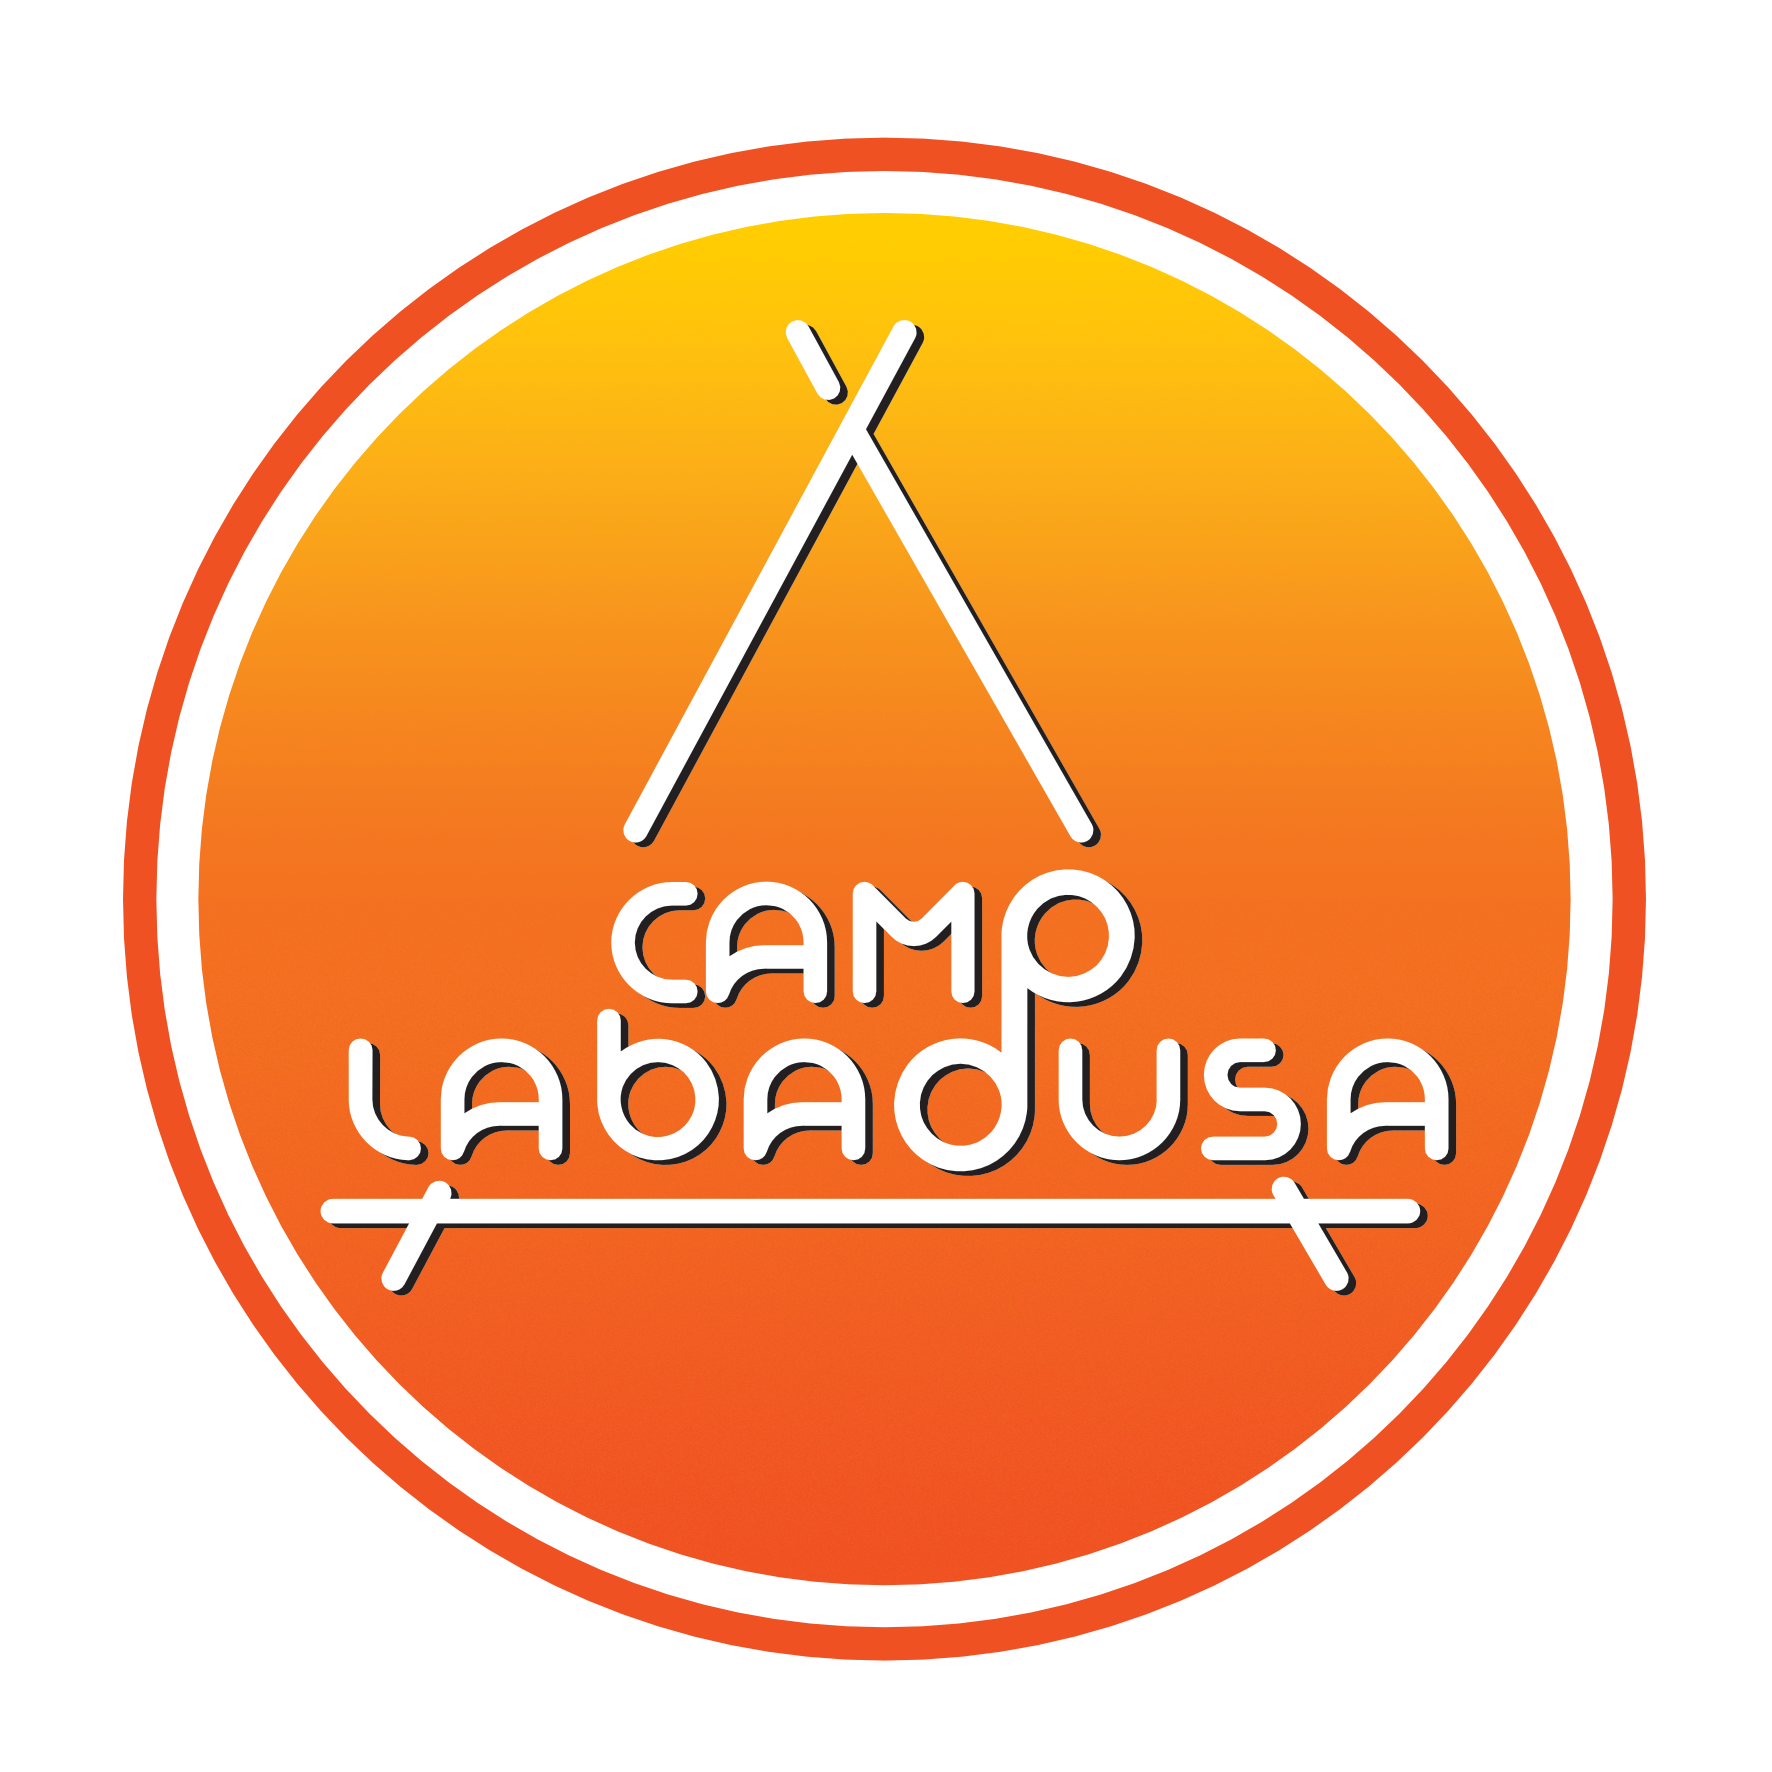 Camp Labadusa, Croatia